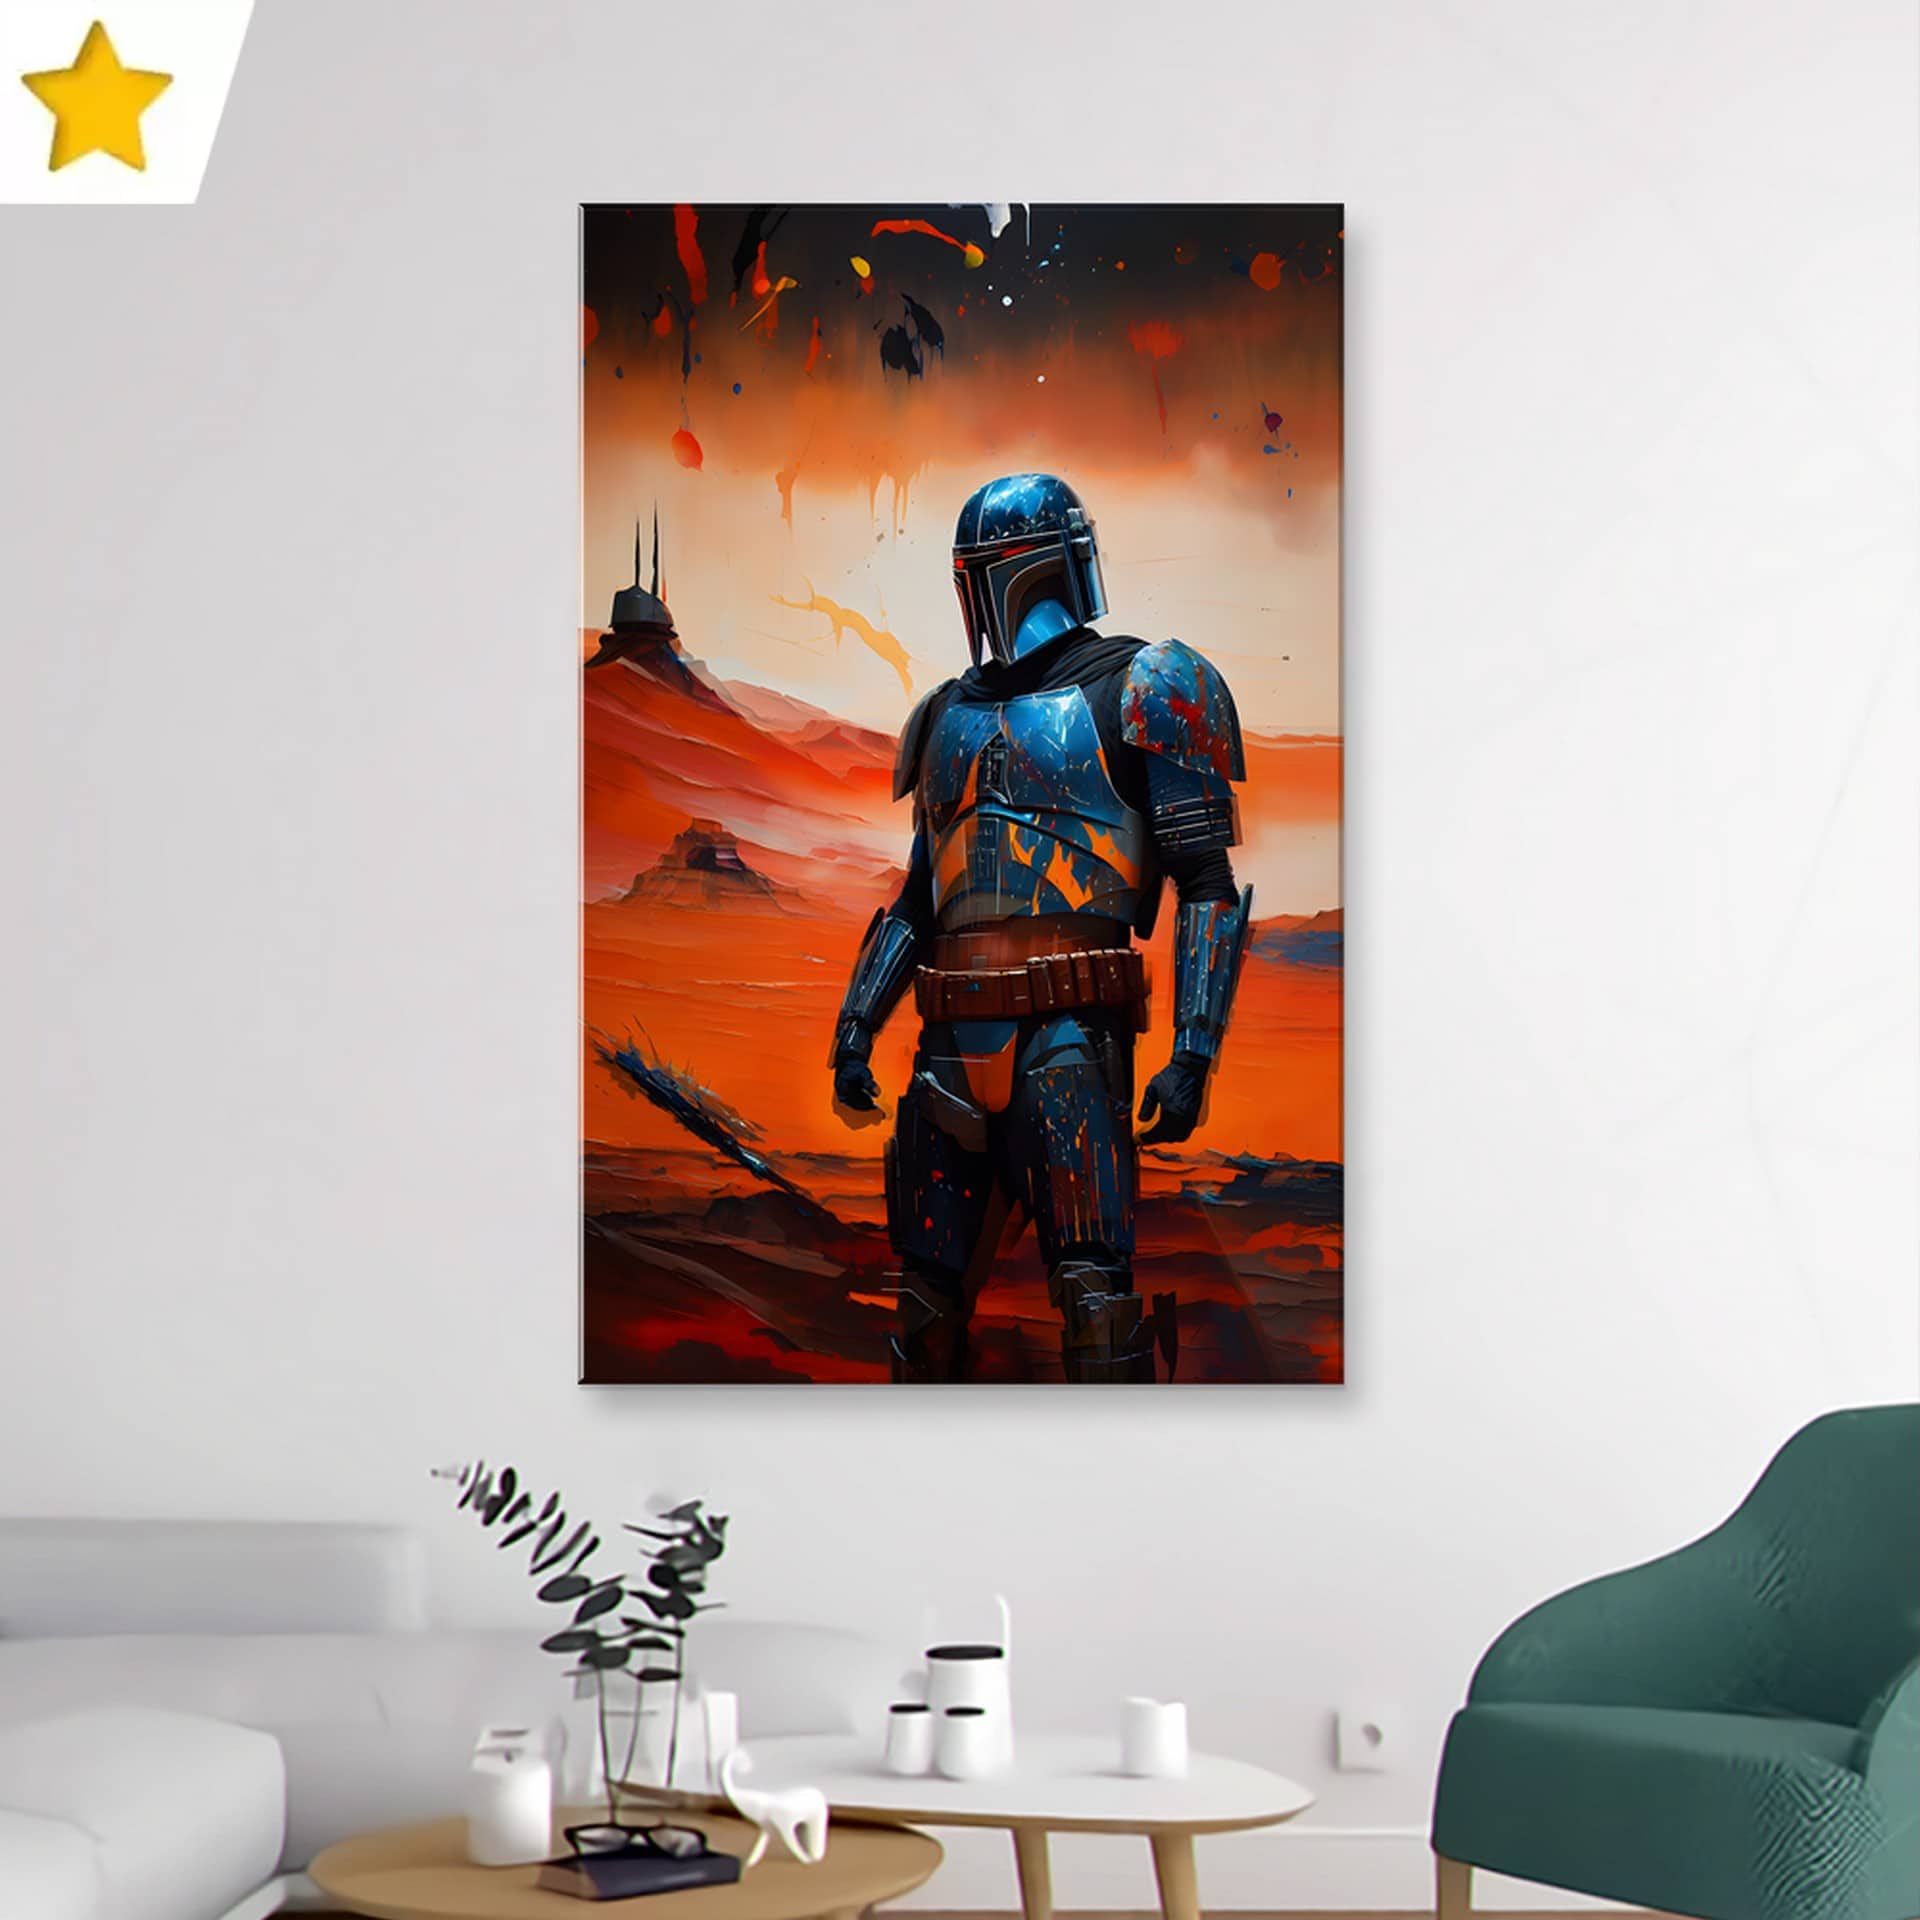 Картина “Мандалорец: Воин пустыни”